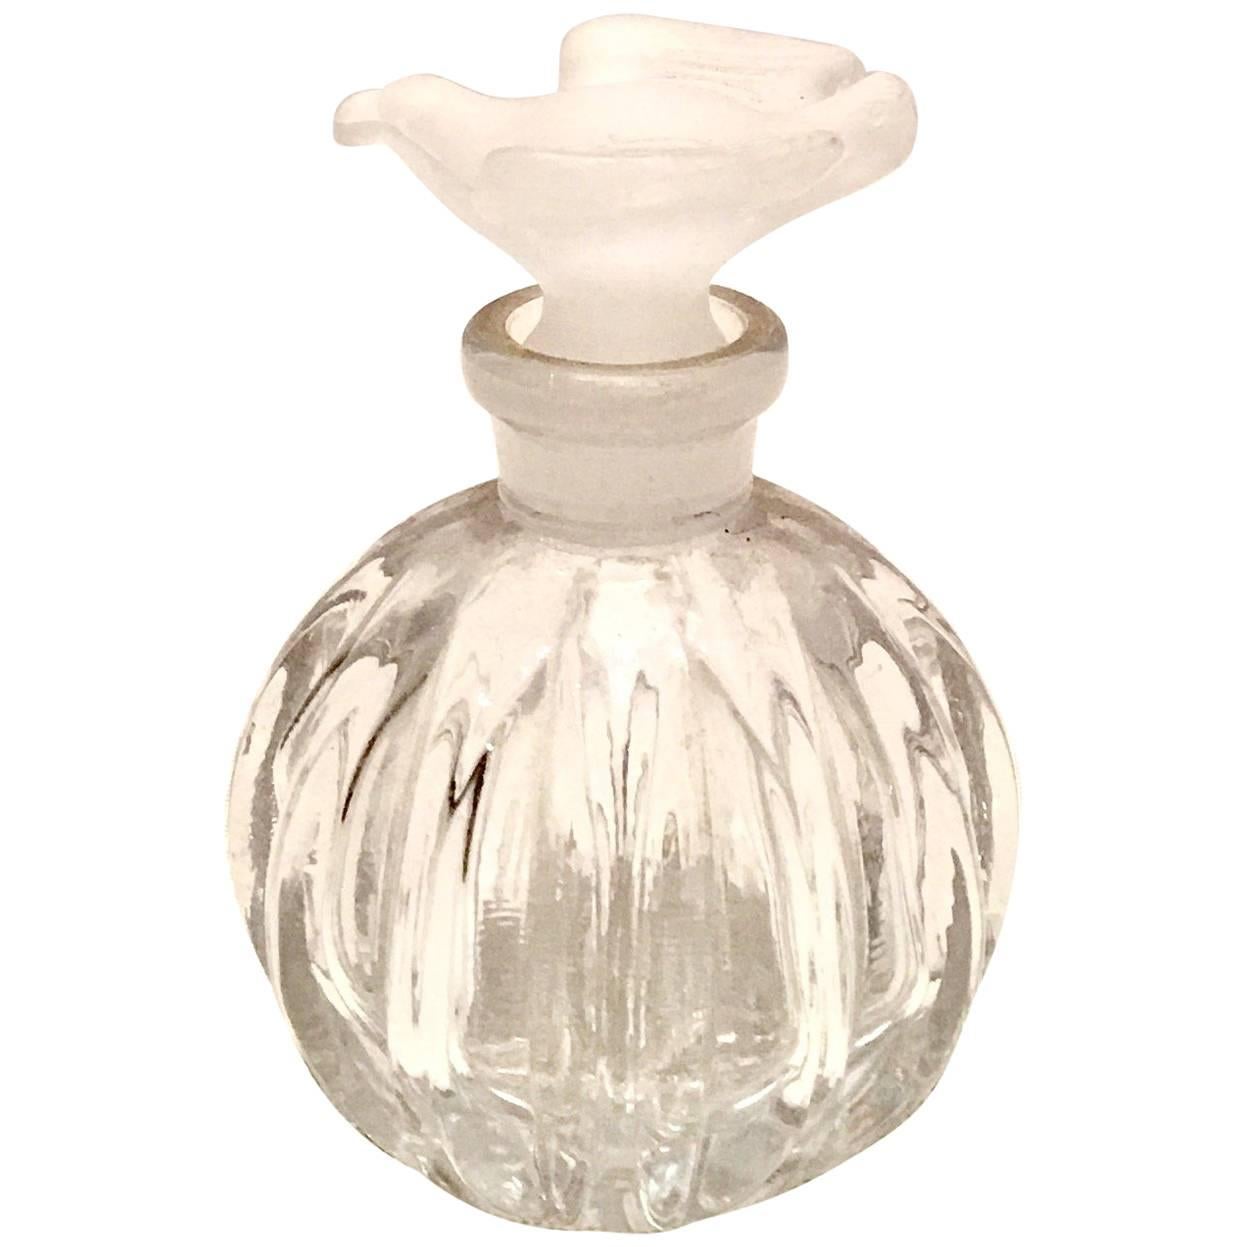 Lalique Crystal Perfume Decanter-"Nina Ricci"